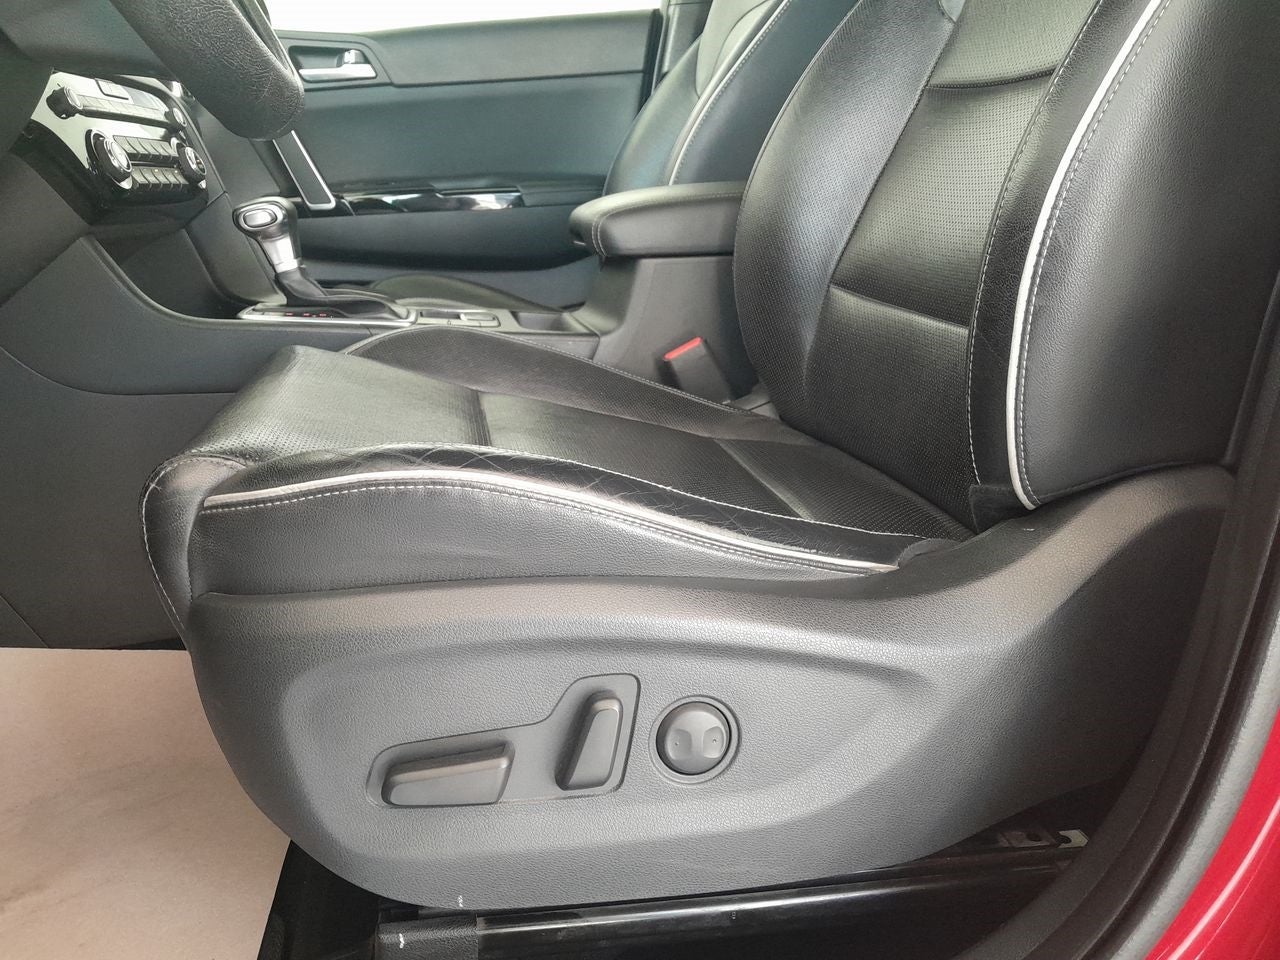 2019 Kia Sportage 5p SXL L4/2.4 Aut